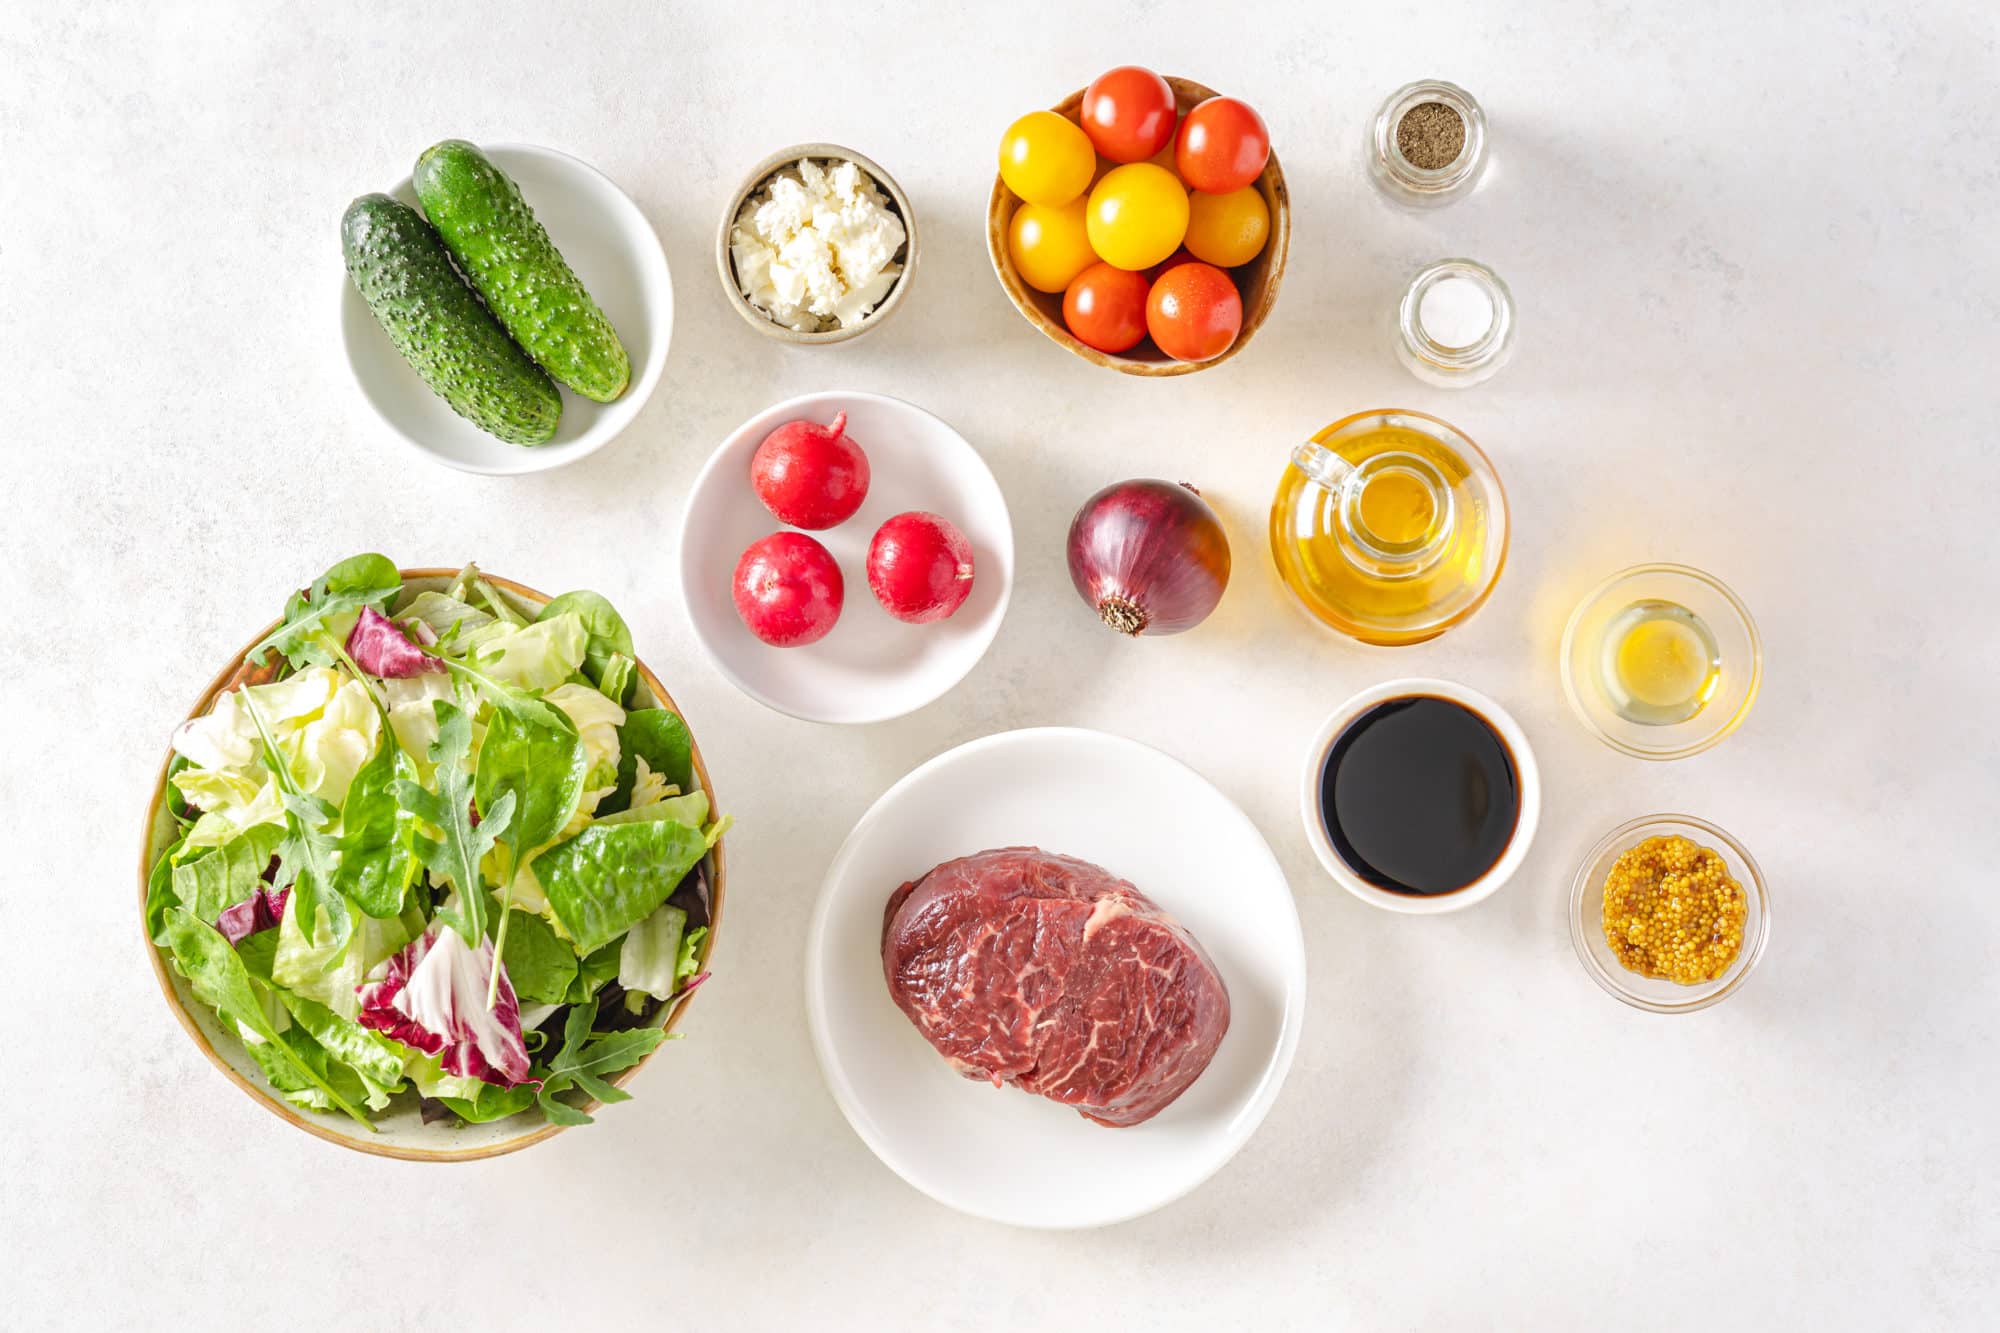 filet-mignon-salad-ingredients-balsamic-vinegar-olive-oil-dijon-mustard-honey-salt-black-pepper-leafy-greens-cherry-tomatoes-cucumbers-red-onion-radishes-feta-cheese-filet-mignon-and-olive-oil